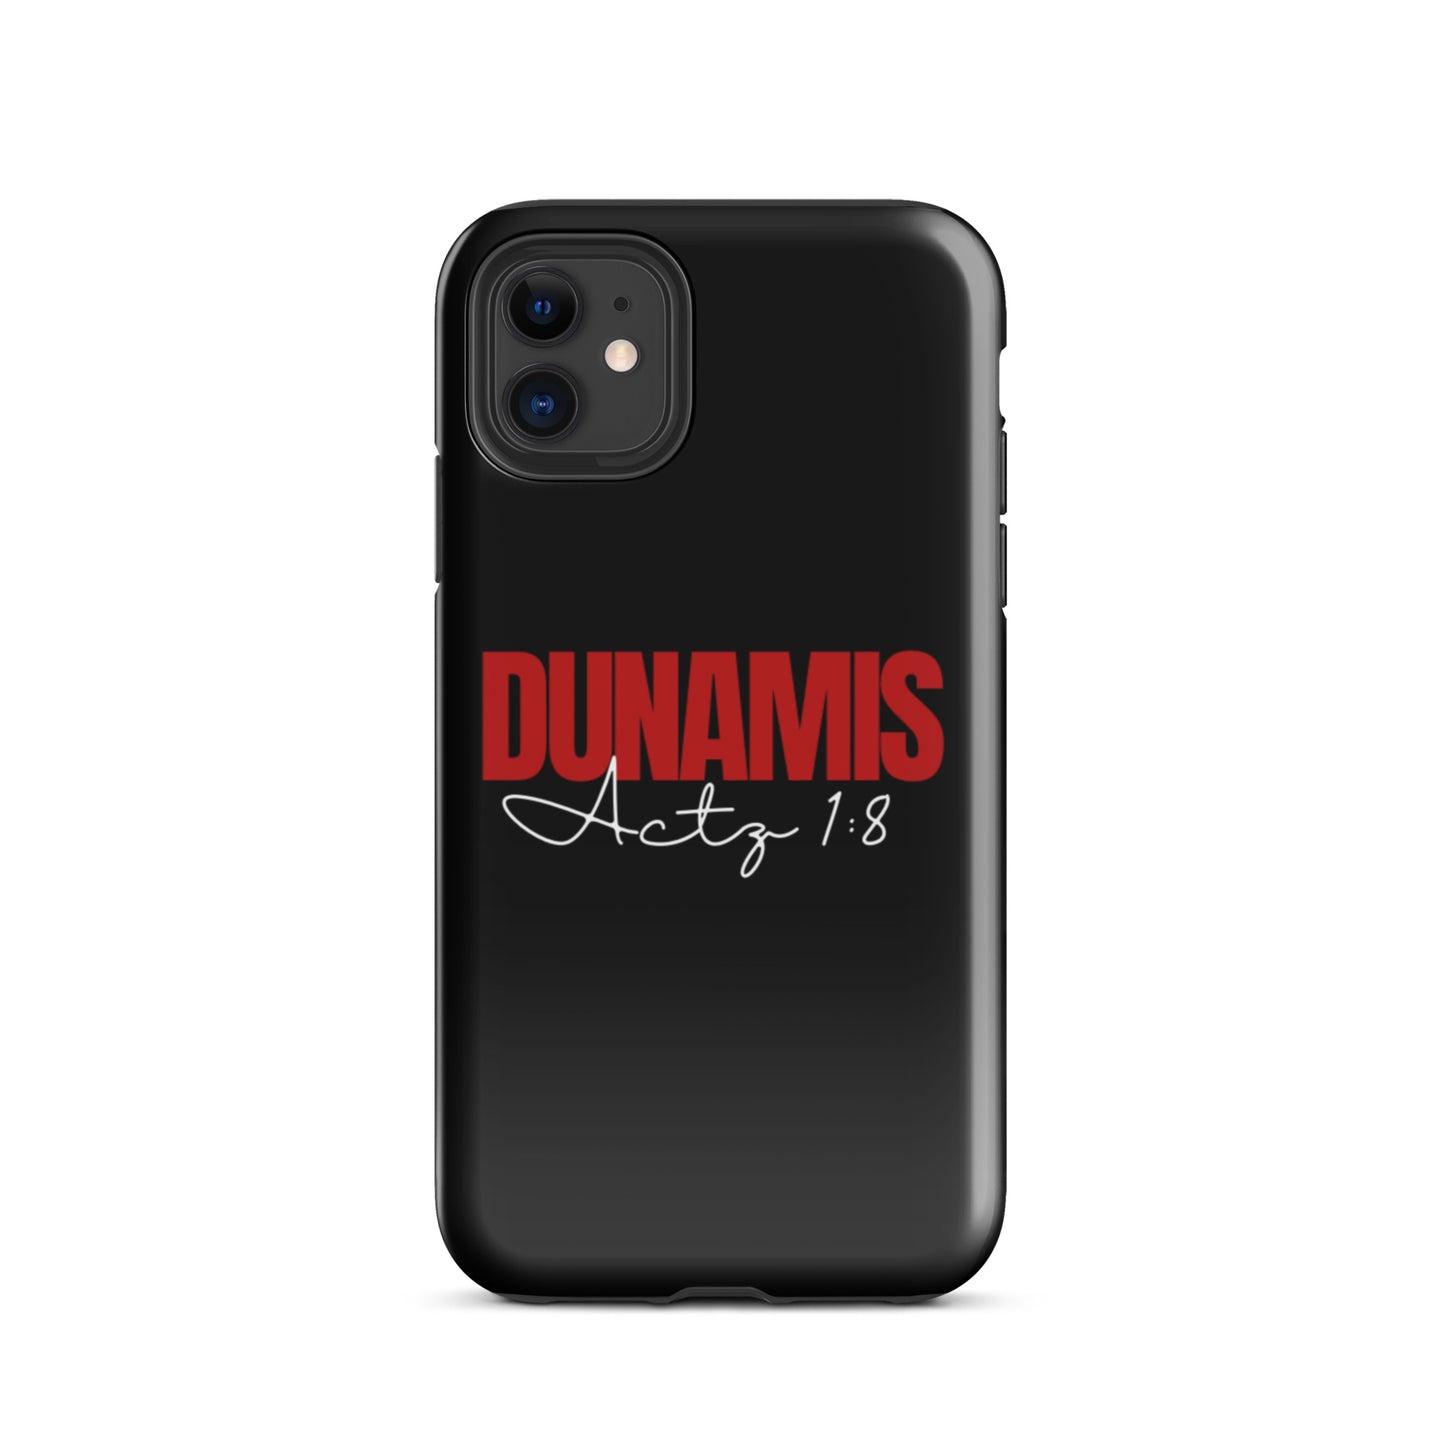 Dunamis Actz Tough Case for iPhone®